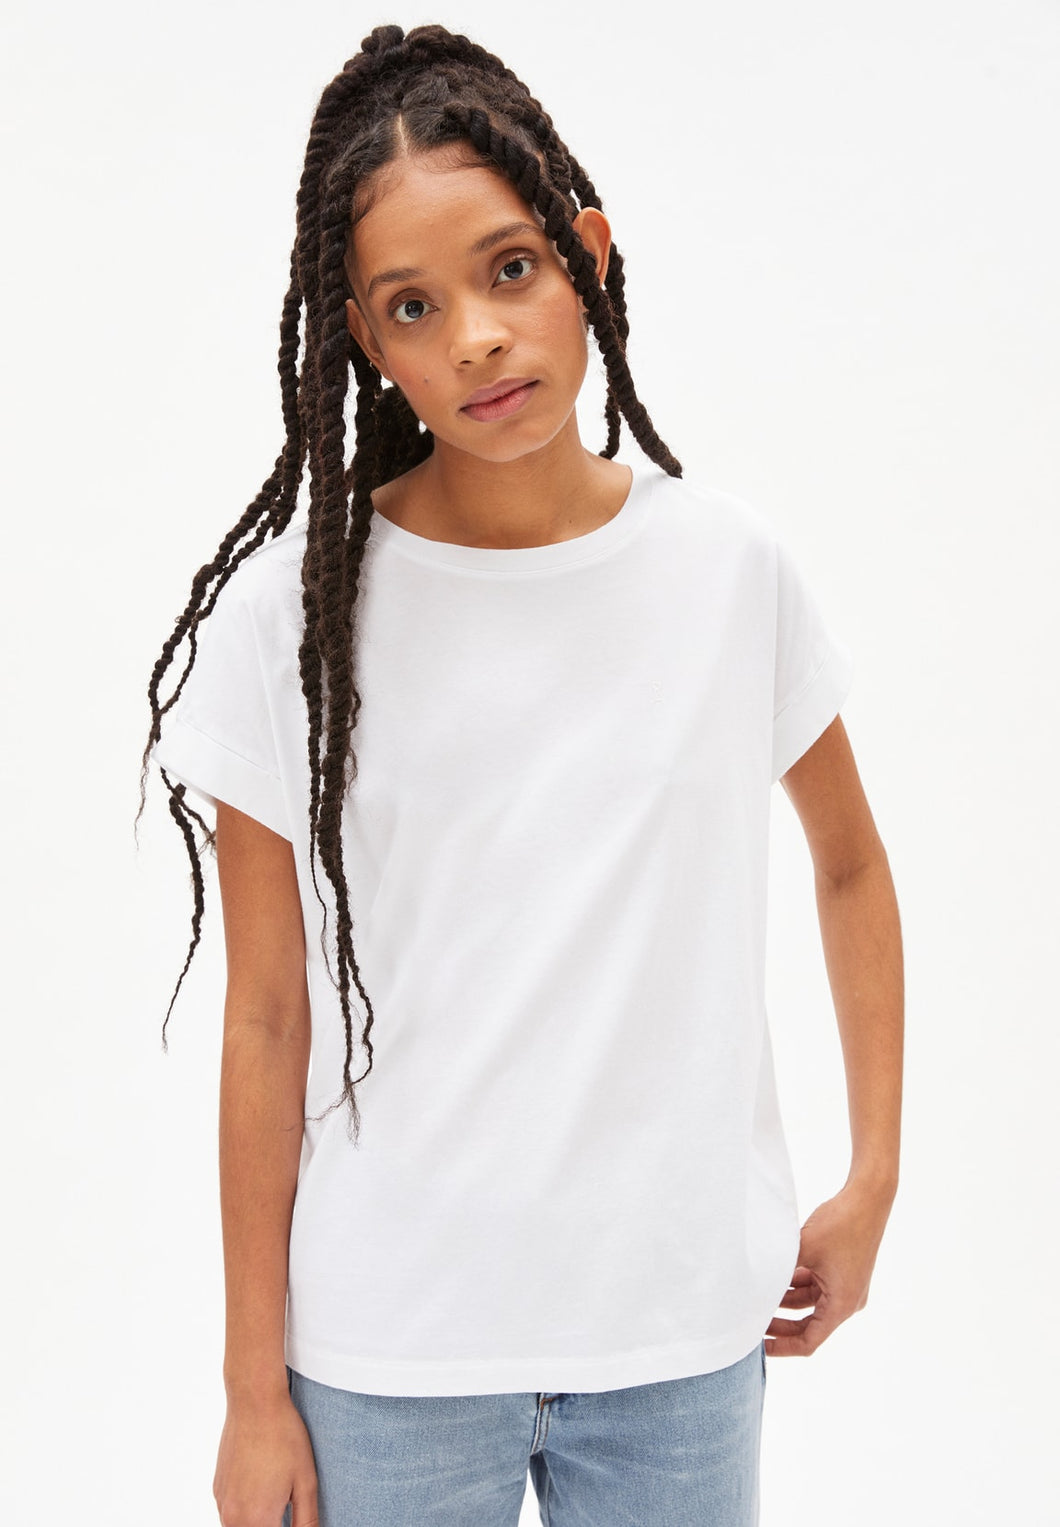 IDAARA T-Shirt White